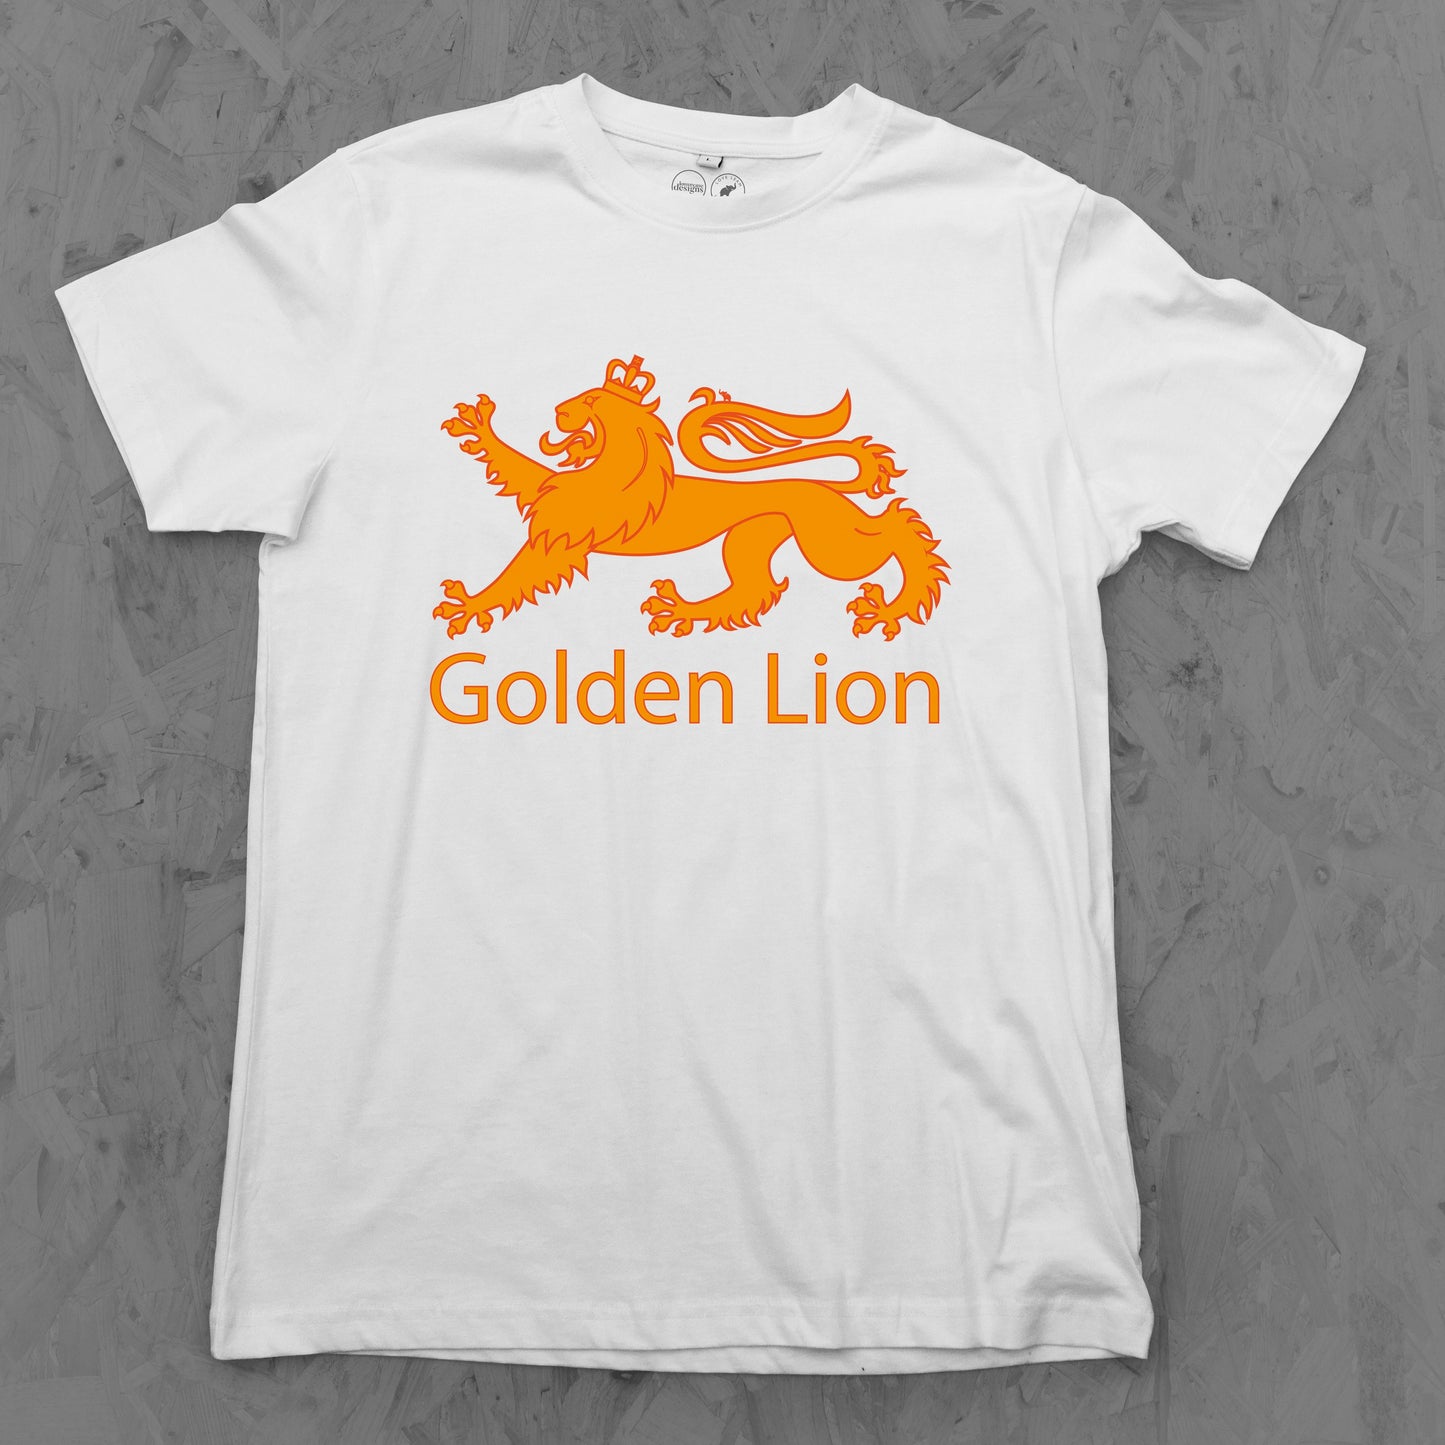 Golden Lion Tee